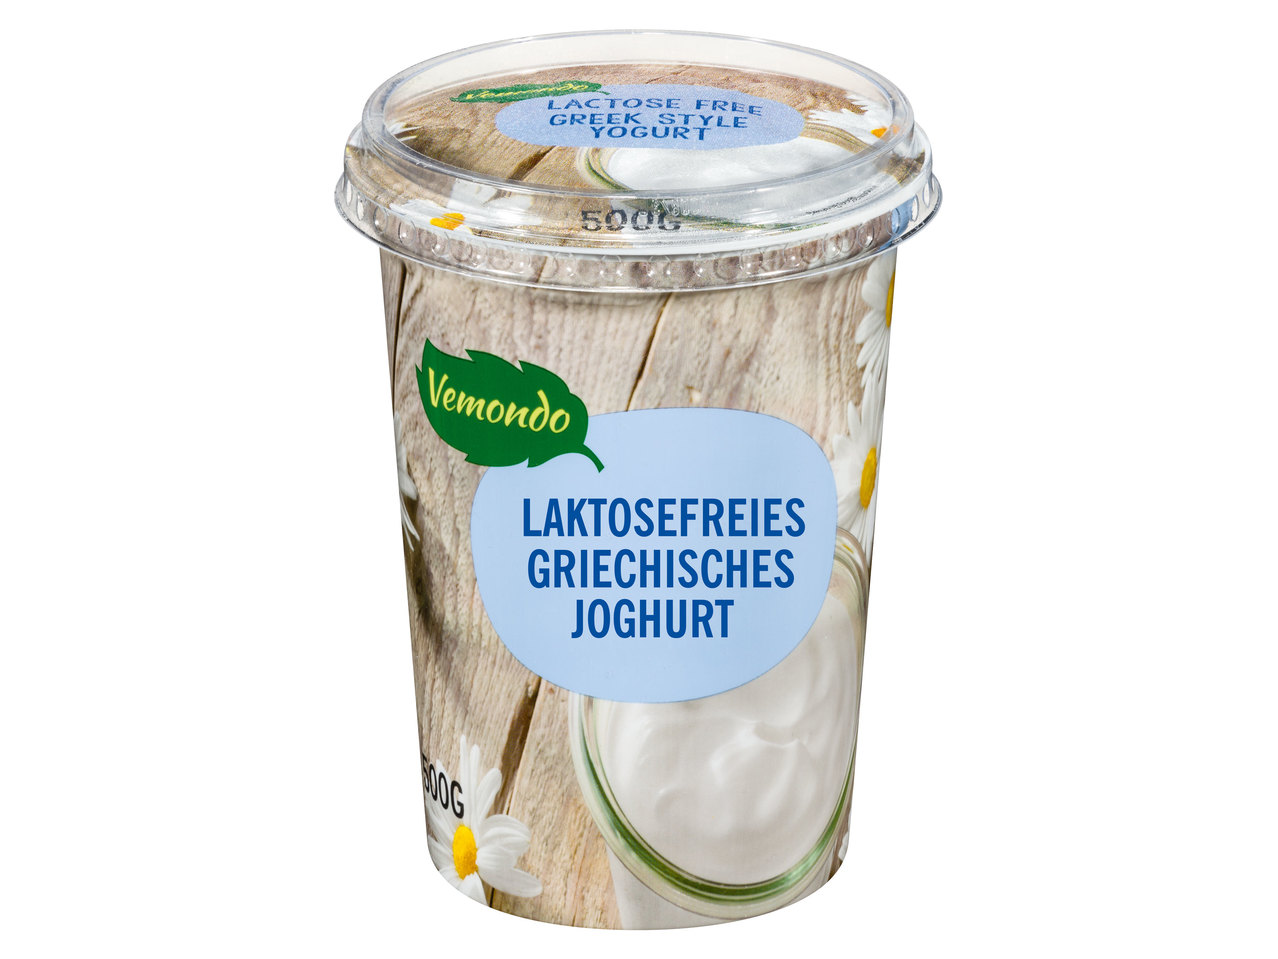 VEMONDO Laktosefreies griechisches Joghurt